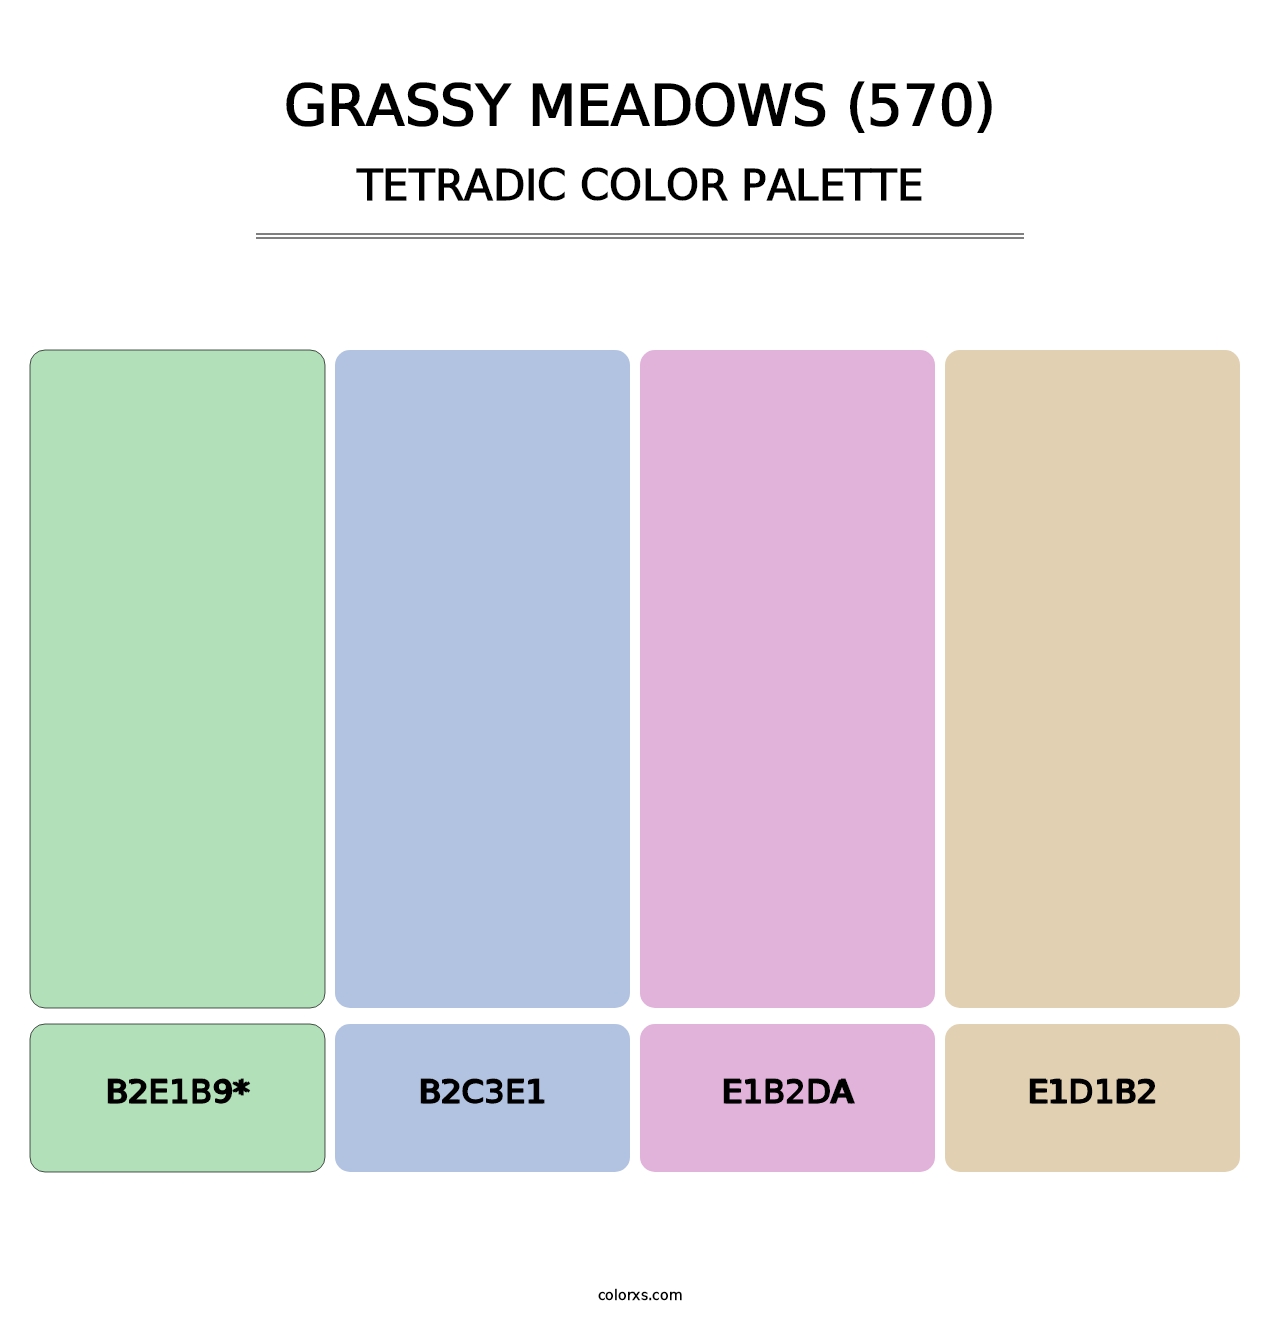 Grassy Meadows (570) - Tetradic Color Palette